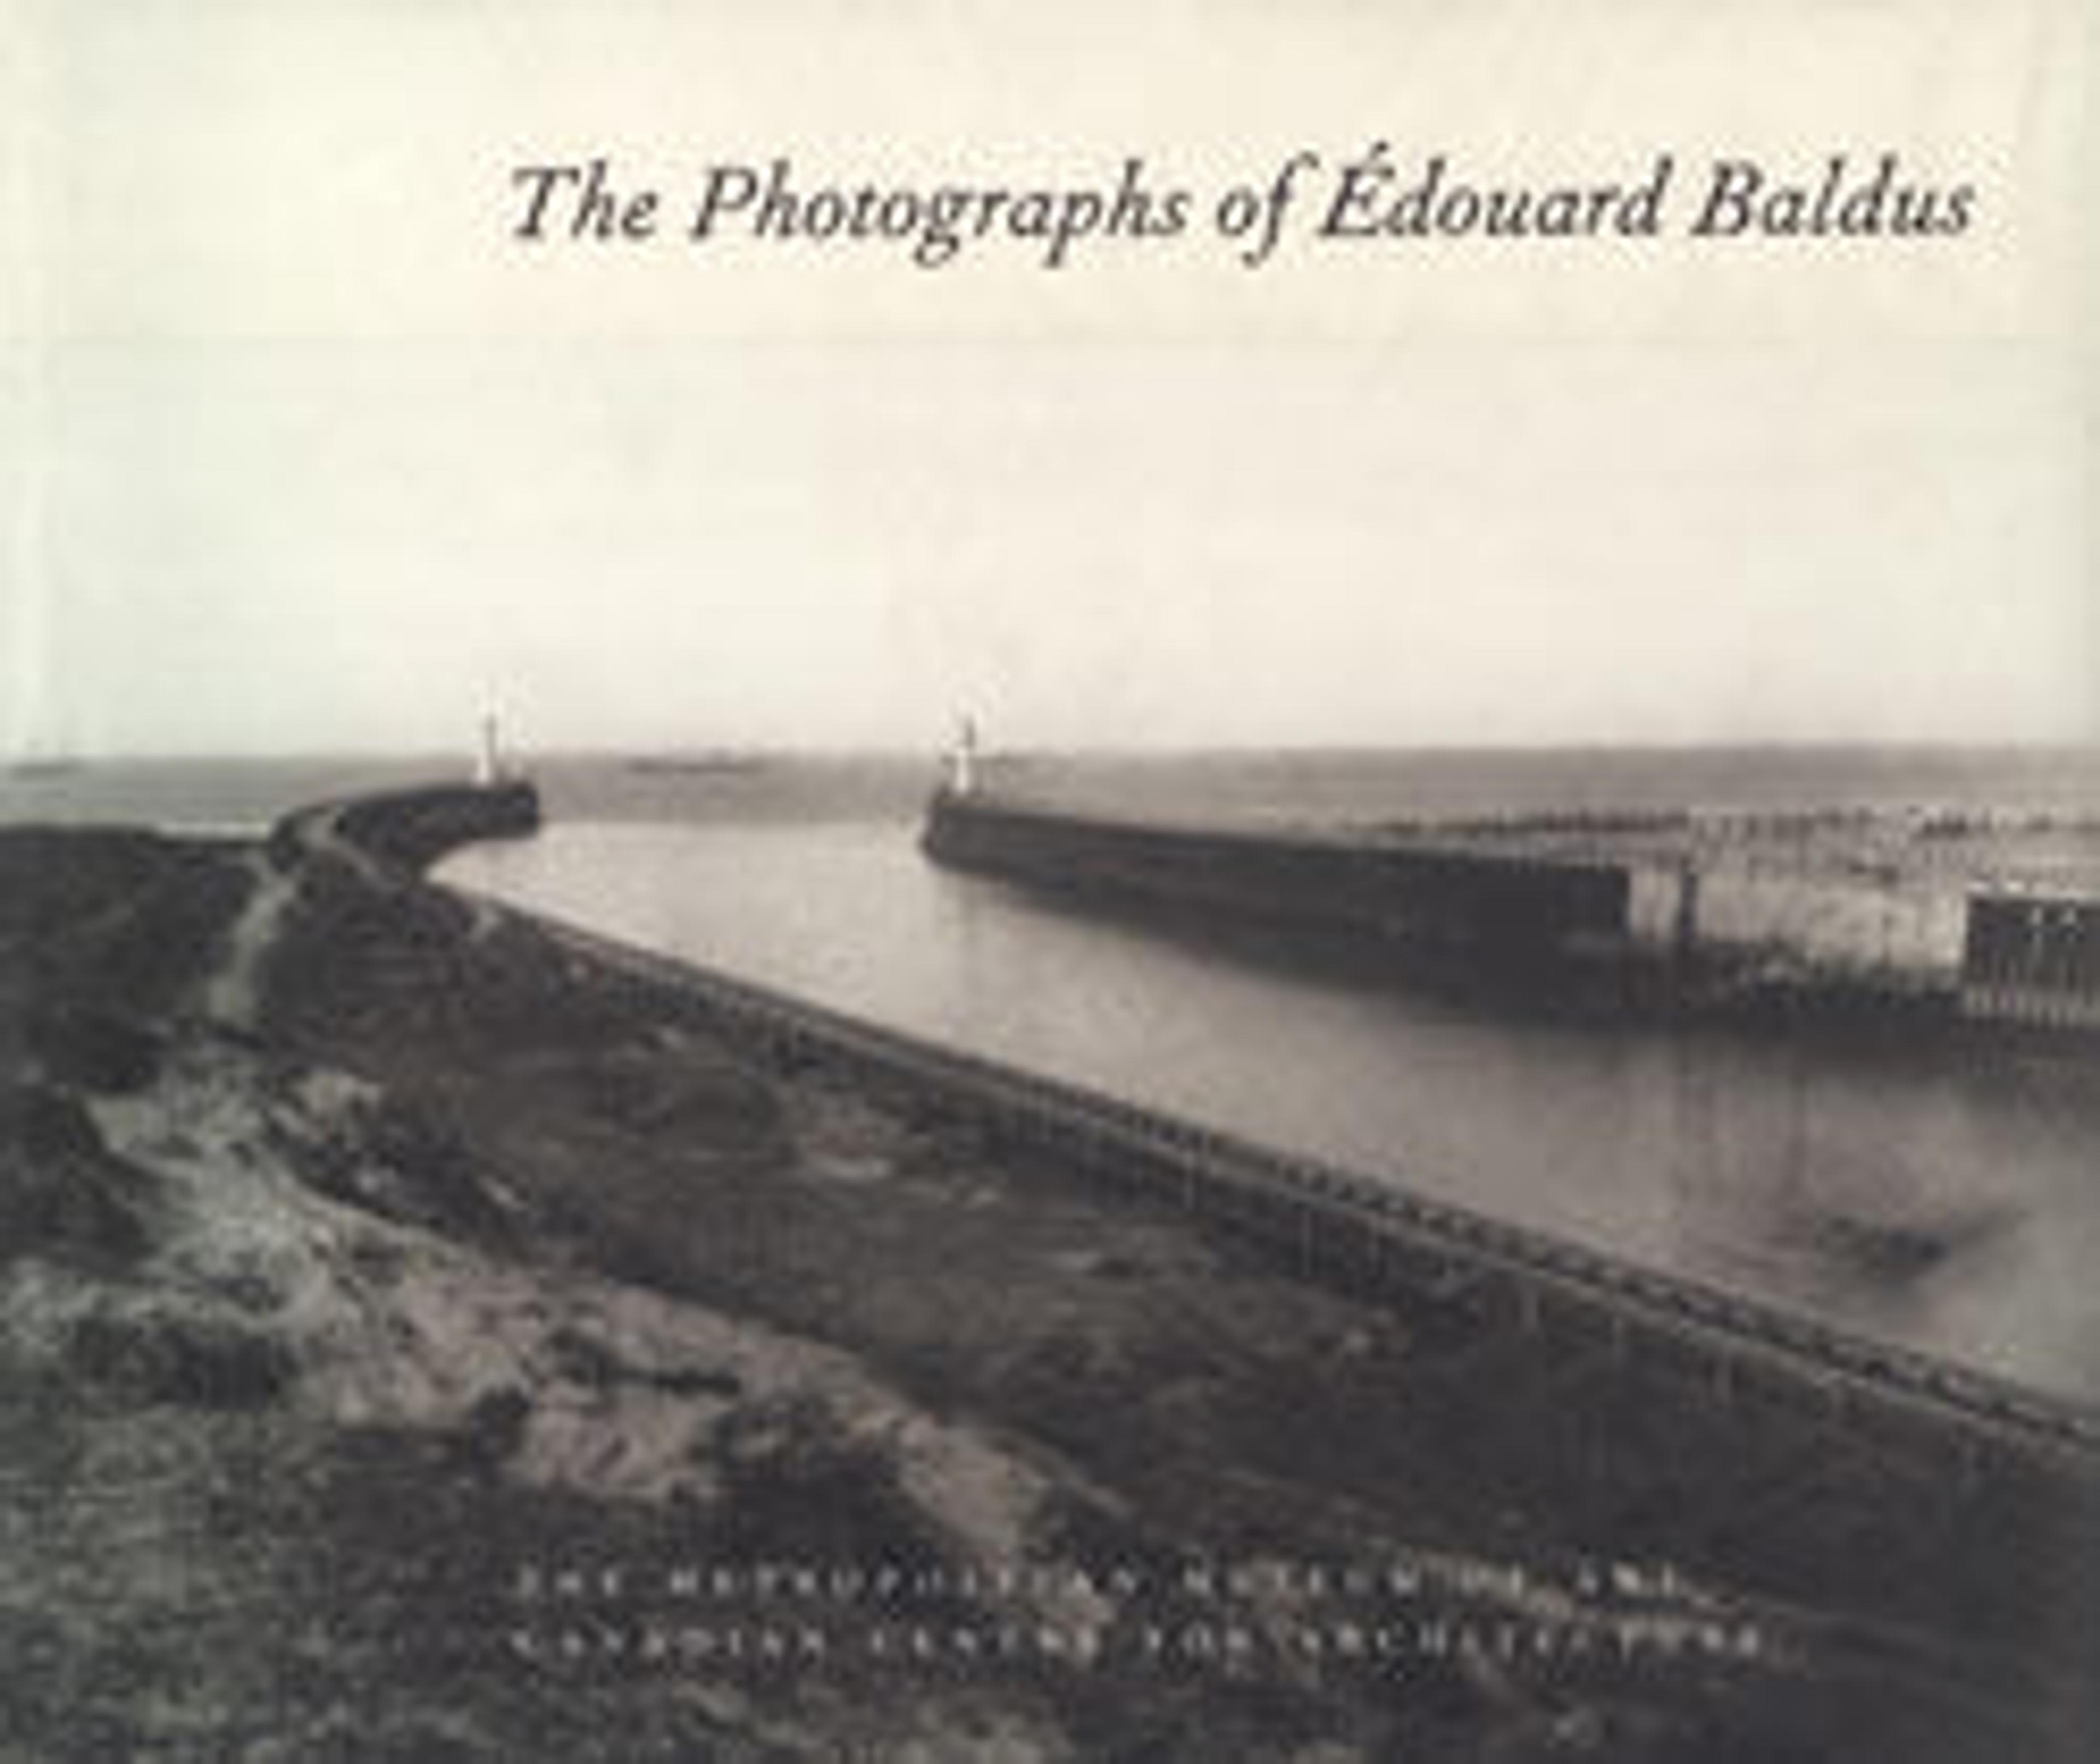 The Photographs of Edouard Baldus